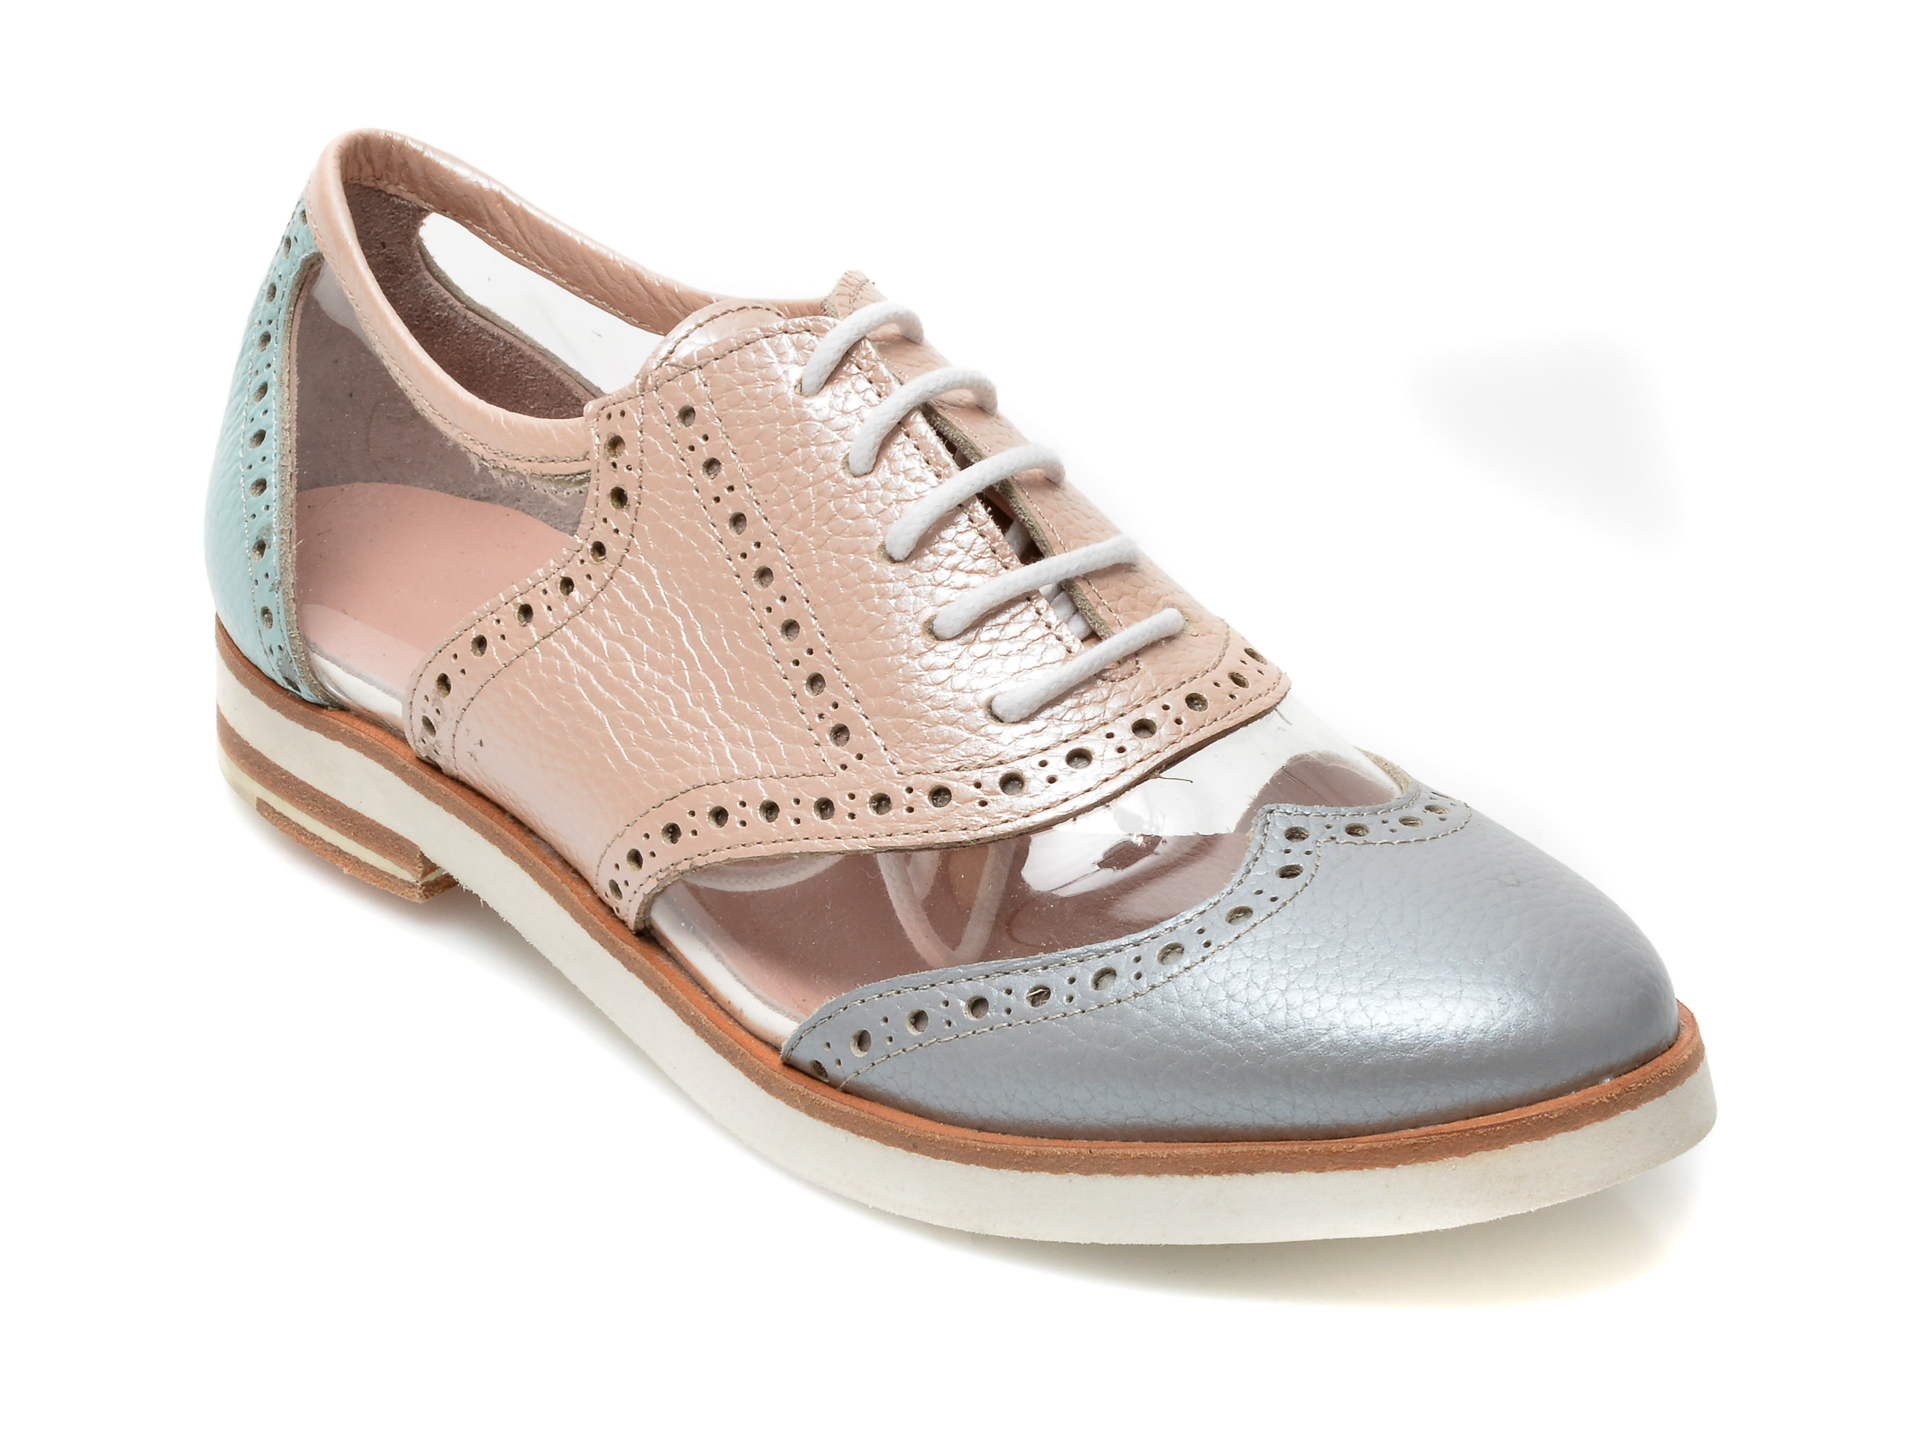 Pantofi LABOUR multicolori, 403, din piele naturala LABOUR LABOUR